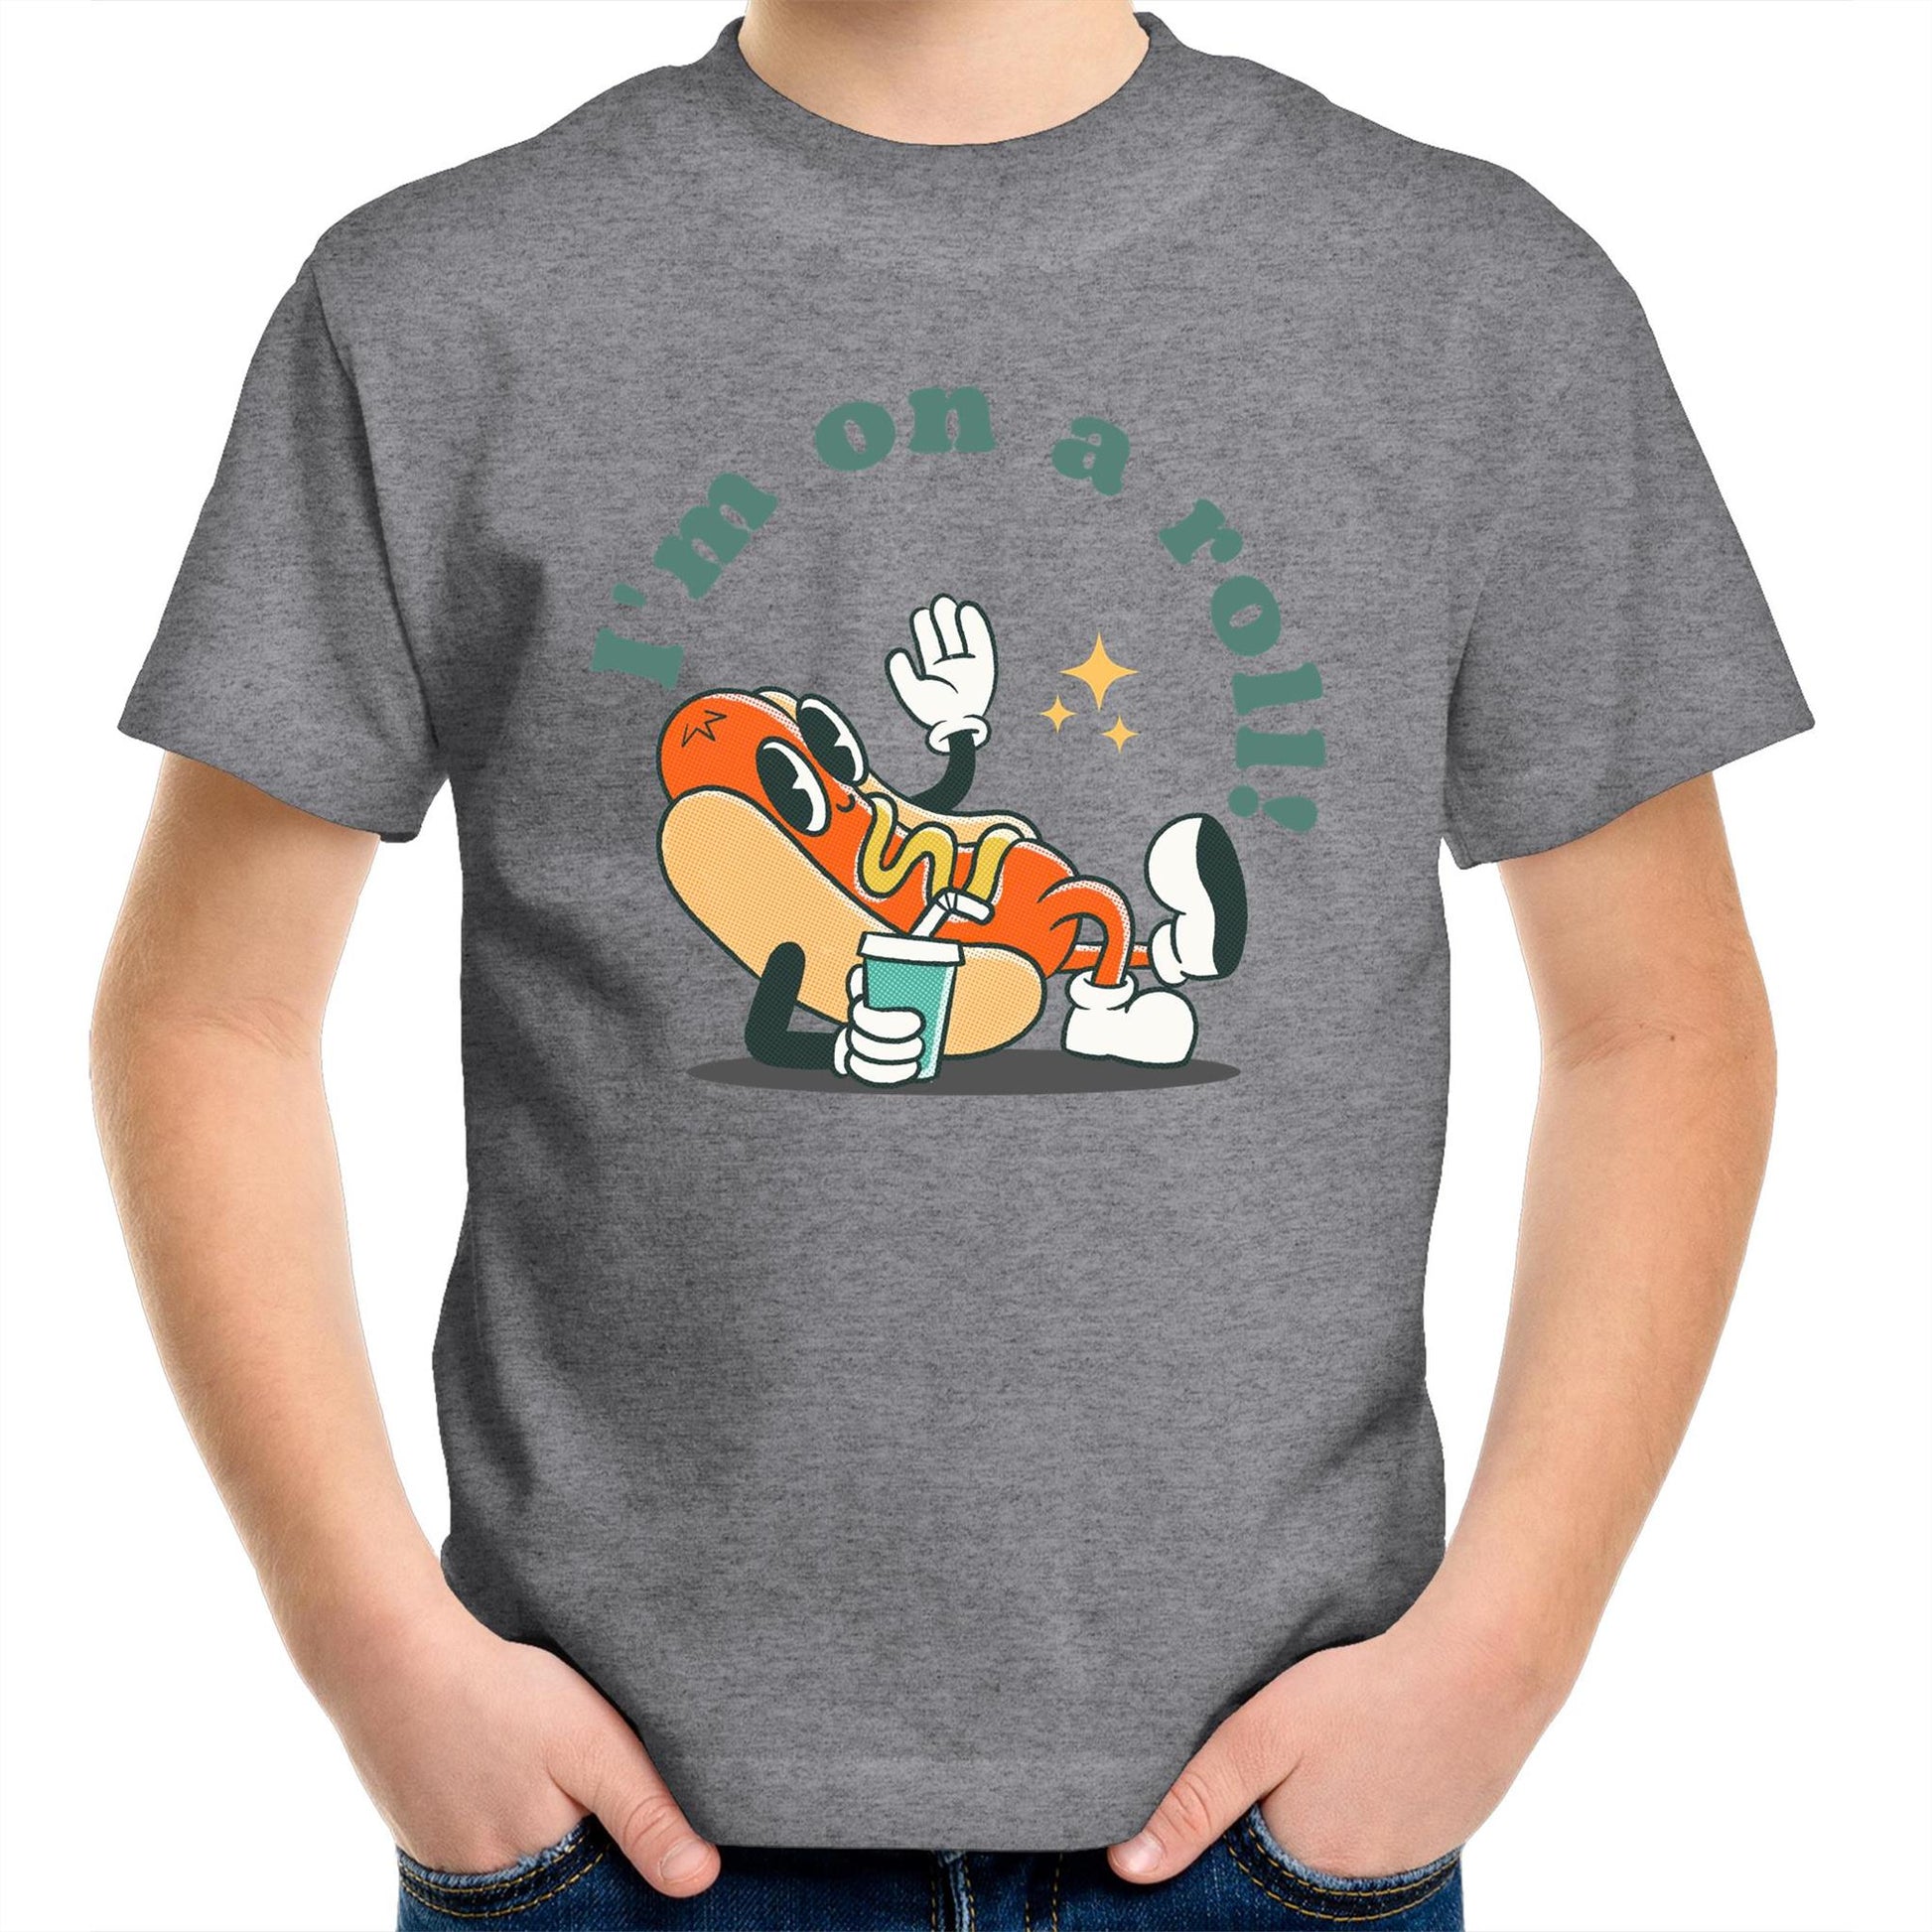 Hot Dog, I'm On A Roll - Kids Youth T-Shirt Grey Marle Kids Youth T-shirt Food